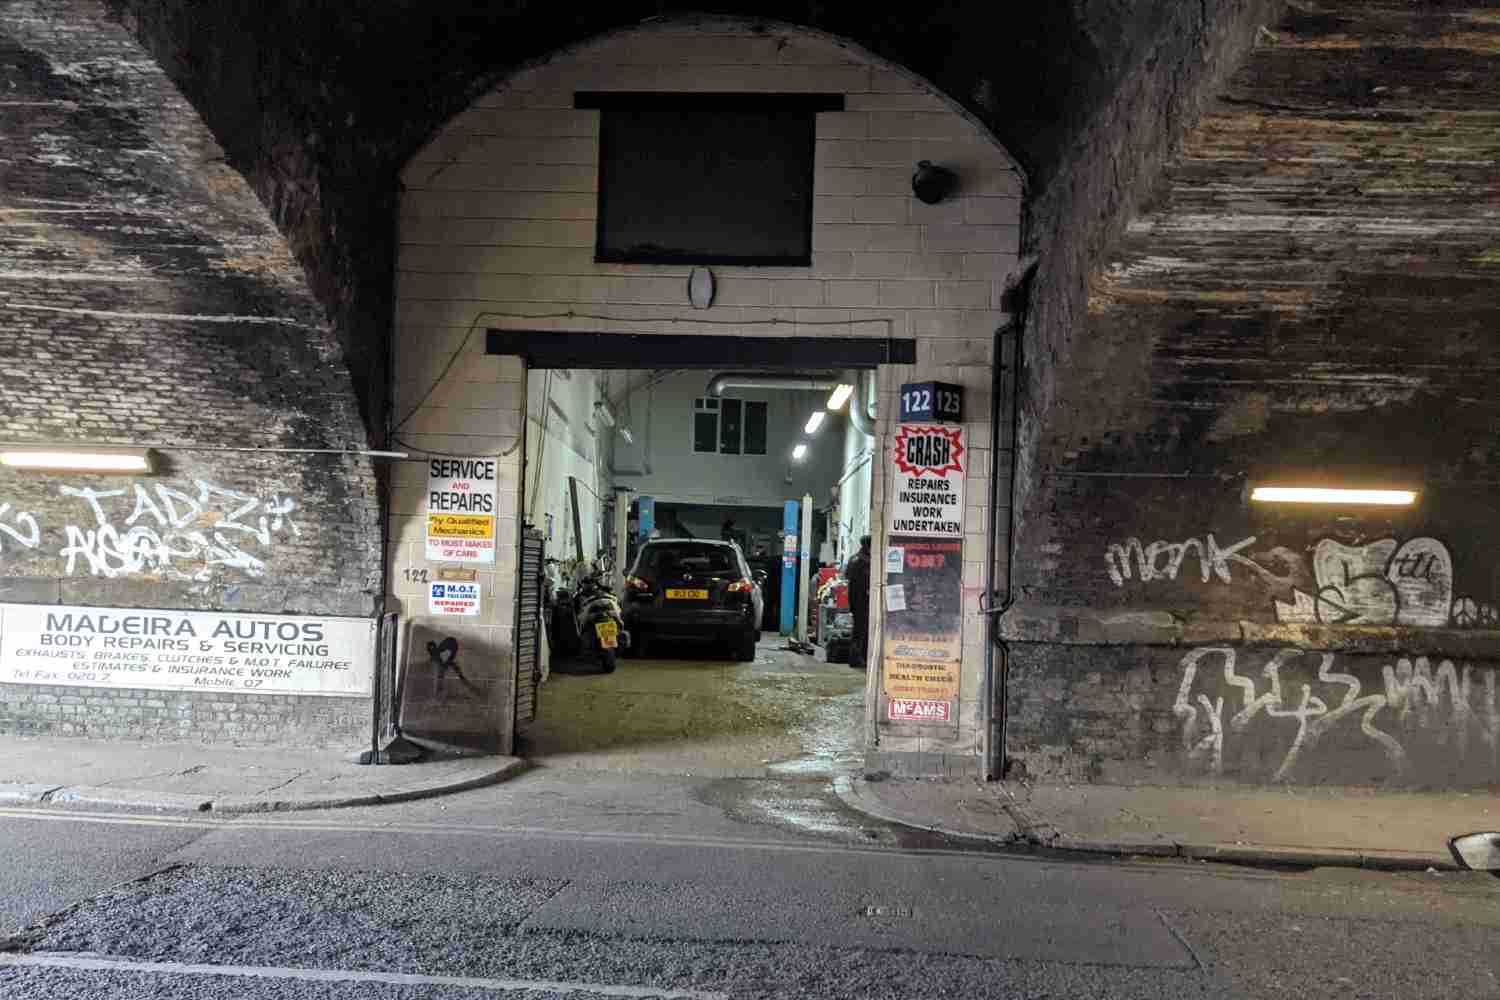 The entrance to Madeira garage, tucked under the railway bridge